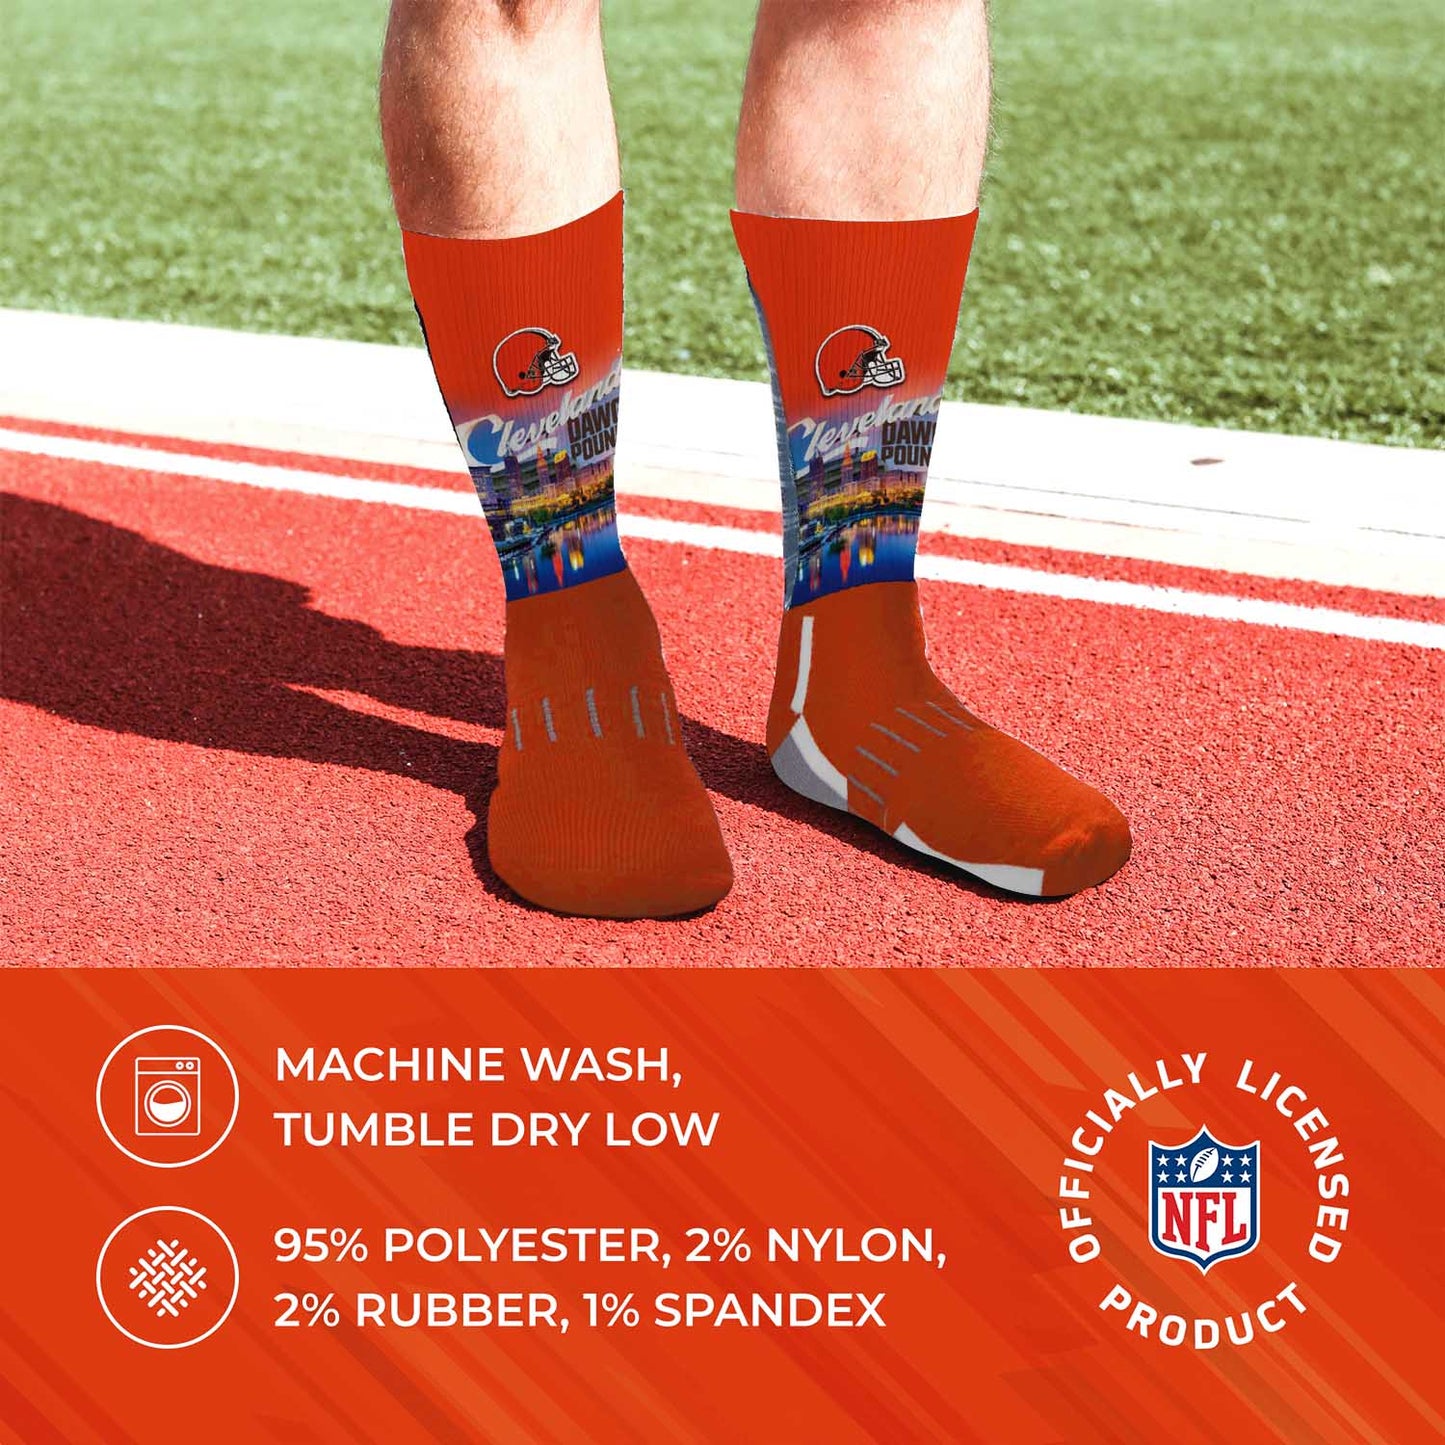 Cleveland Browns NFL Adult Zoom Location Crew Socks - Orange